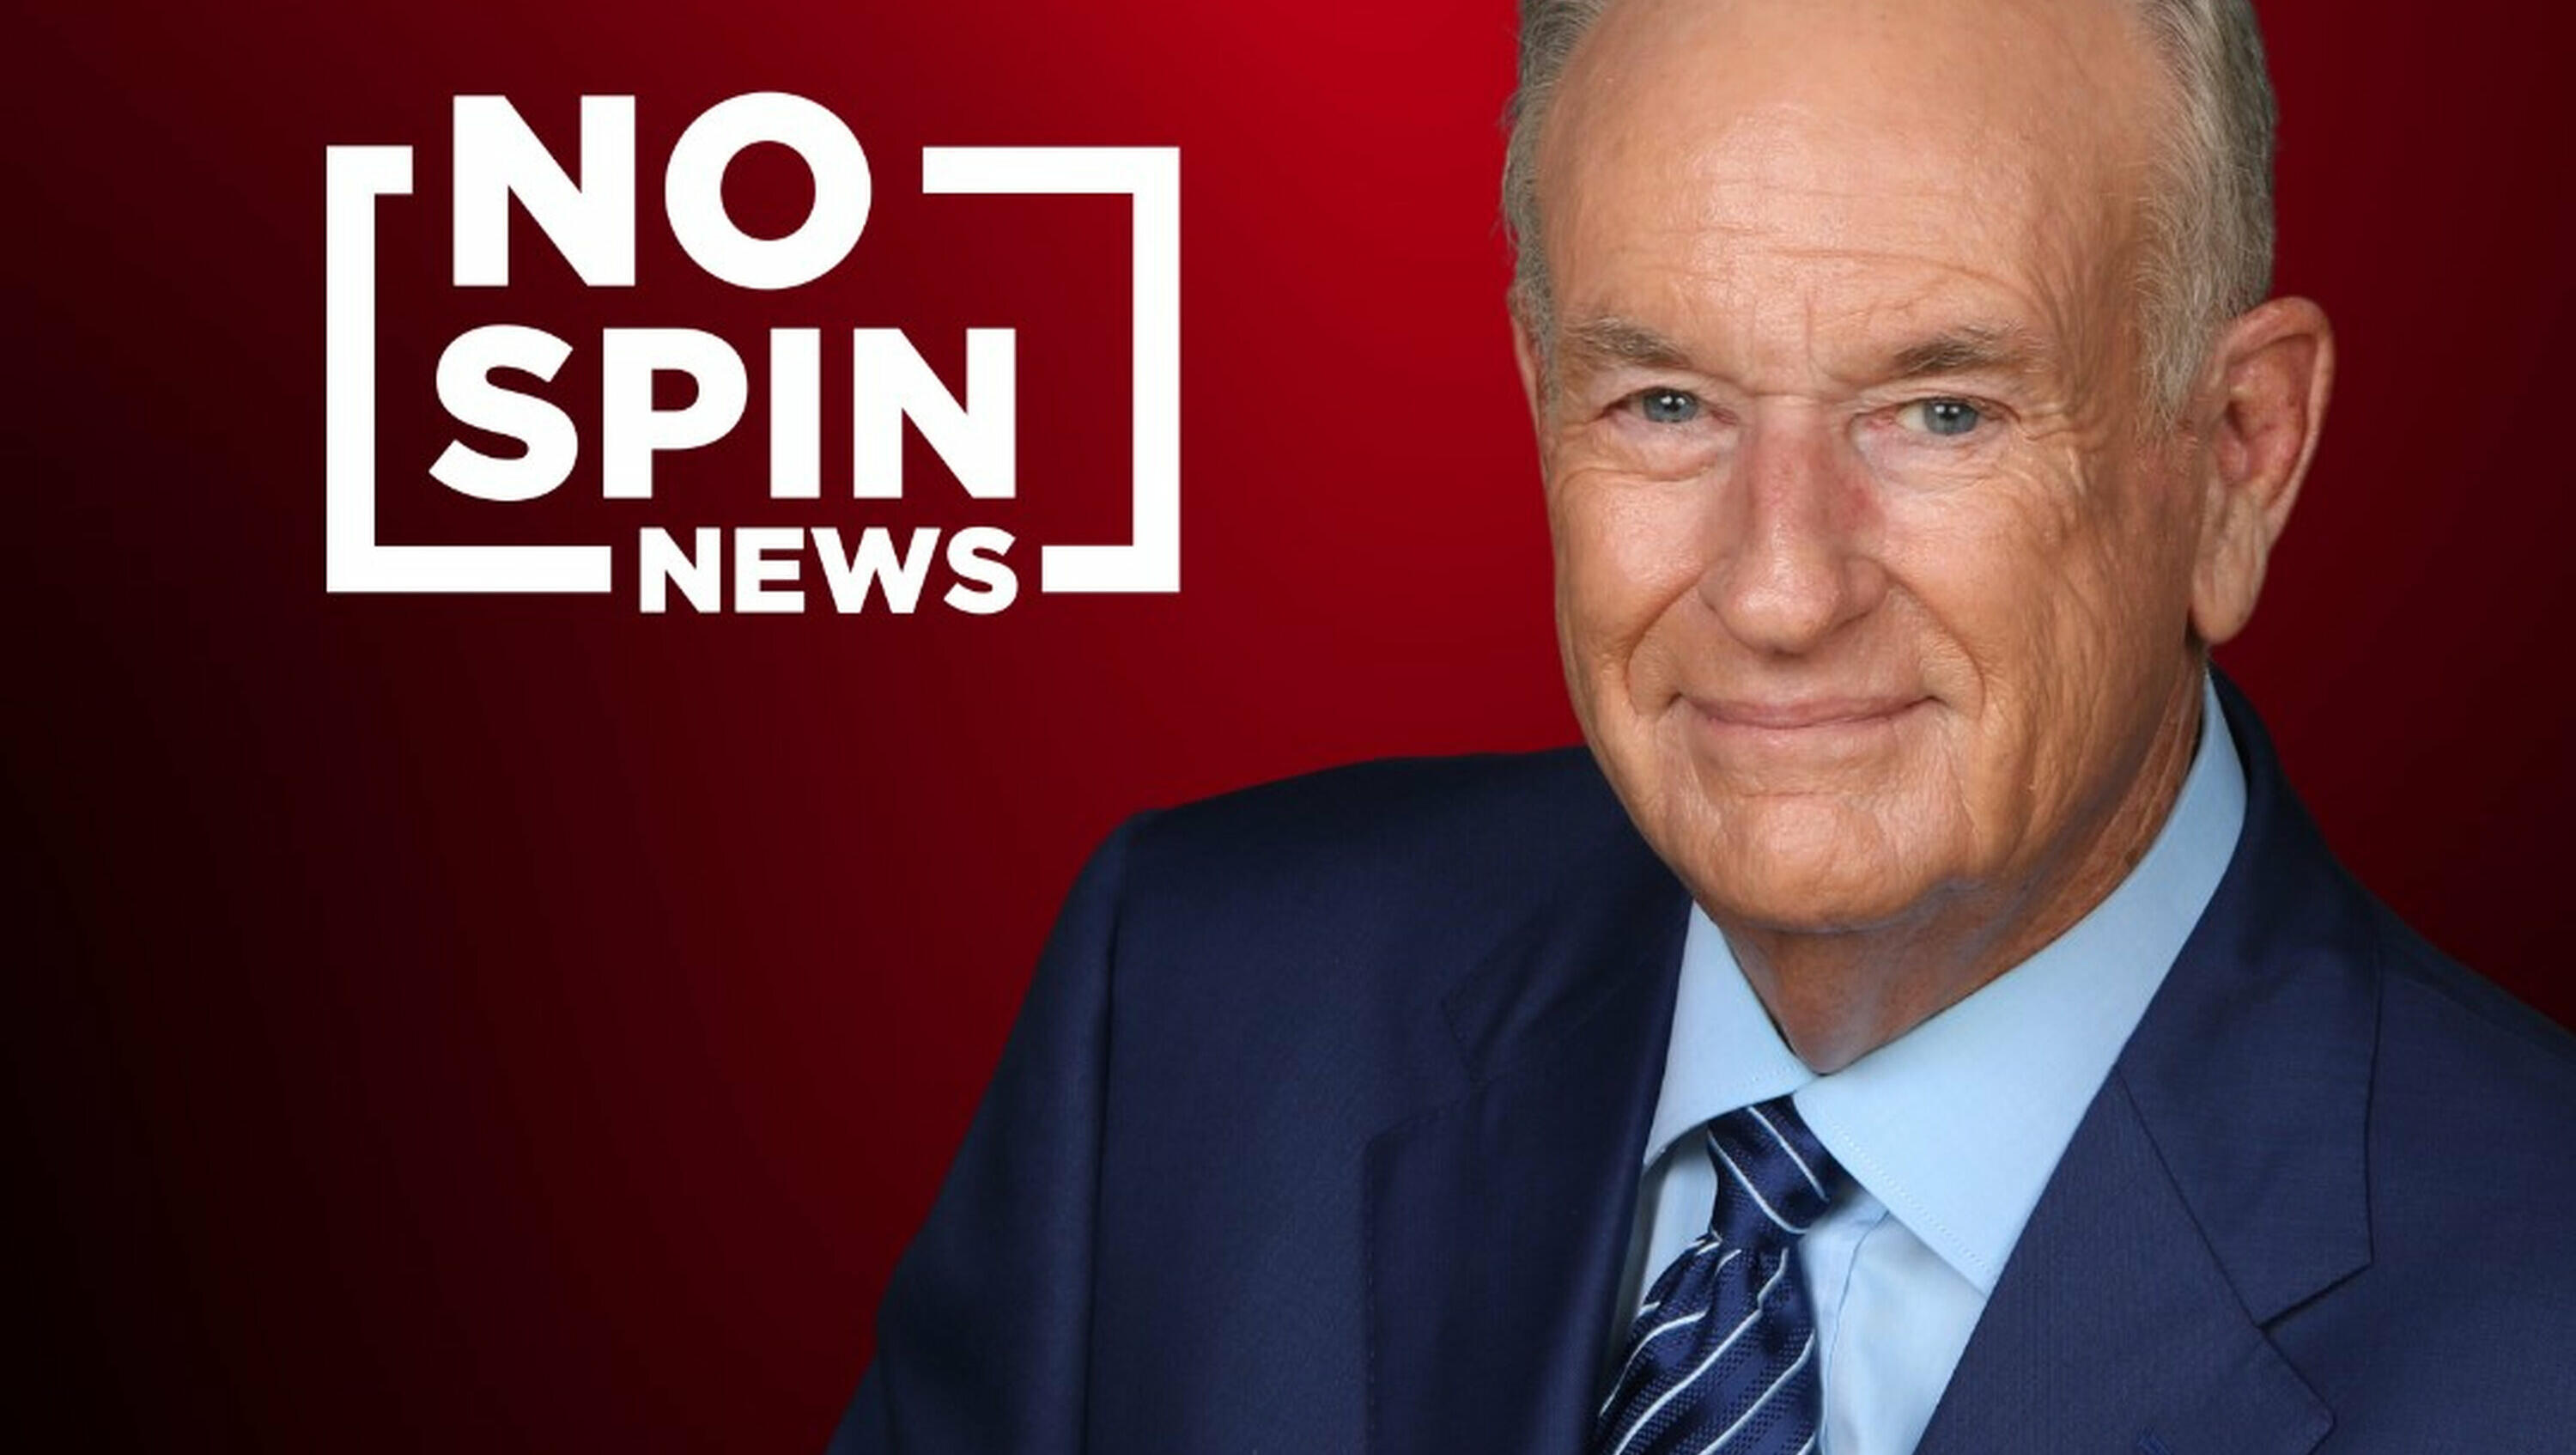 BONUS EPISODE | Bill O'Reilly's No Spin News and Analysis